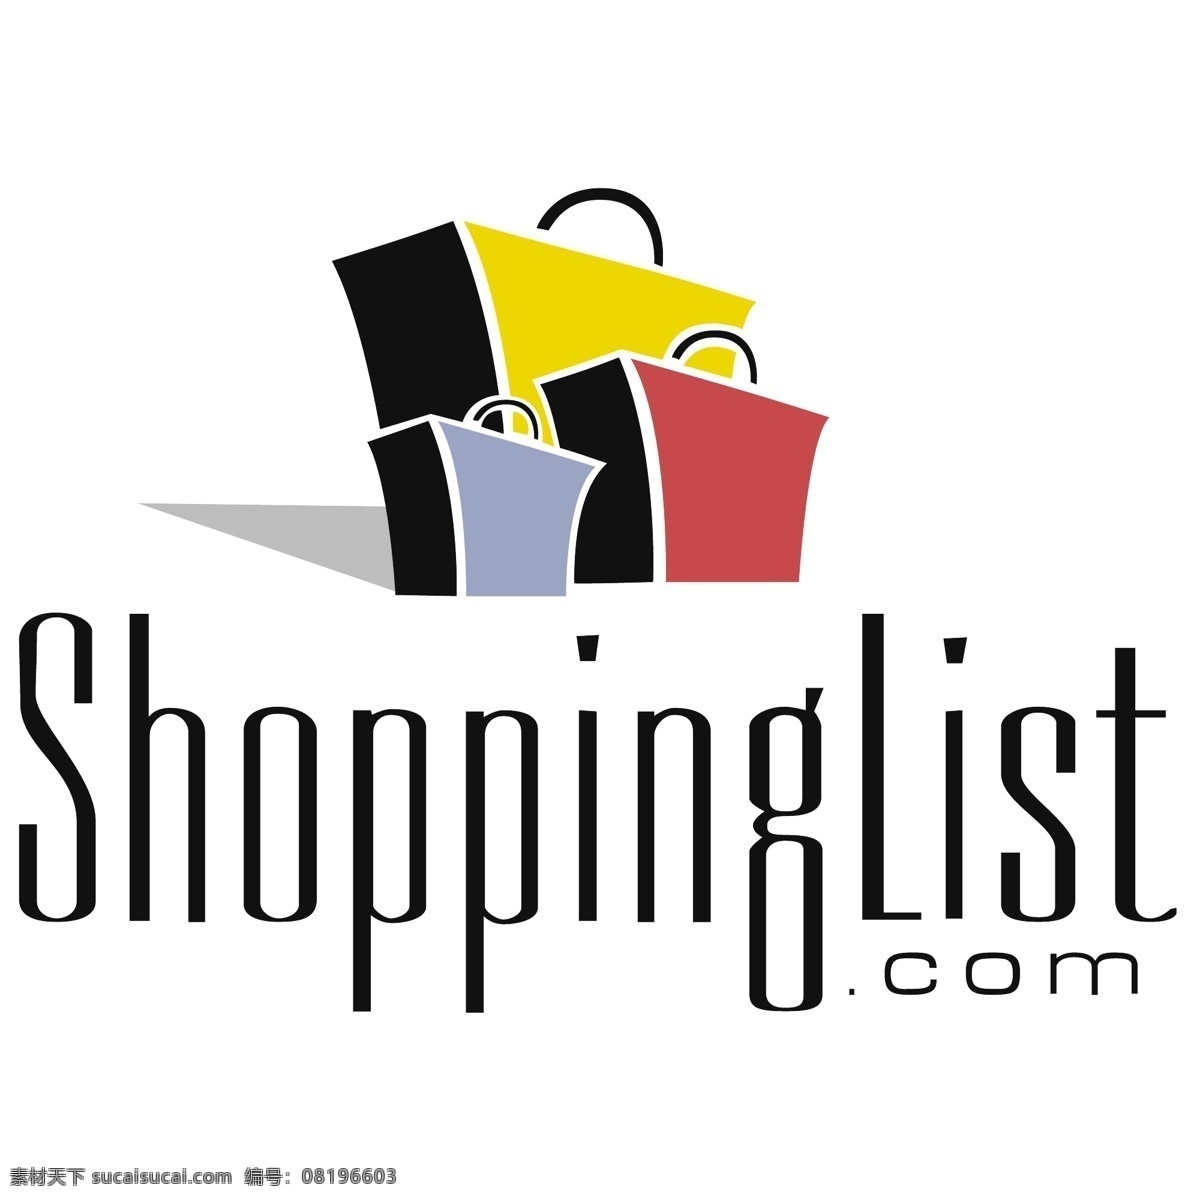 shoppinglist com 自由 标识 白色